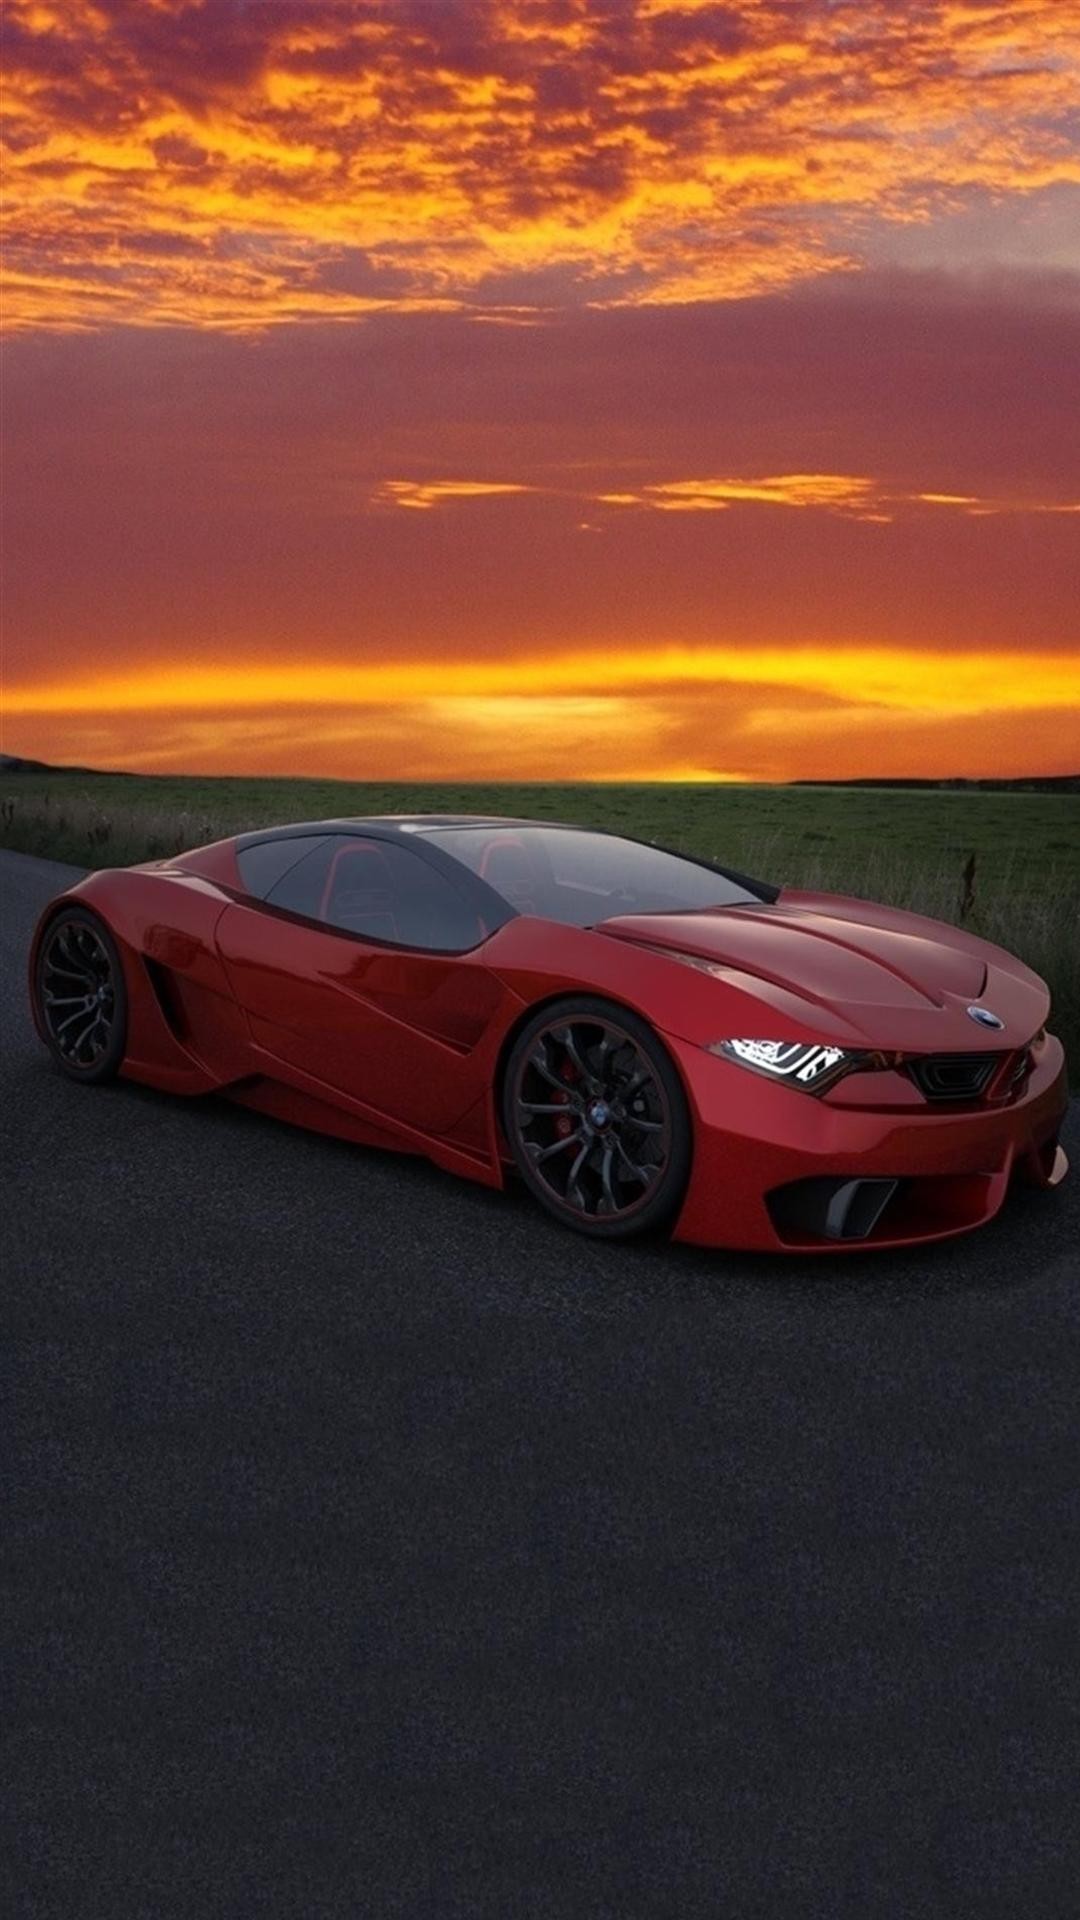 1080x1920 Men's World BMW GT Red Car Speed. App WallpaperWallpaper BackgroundsCool ...